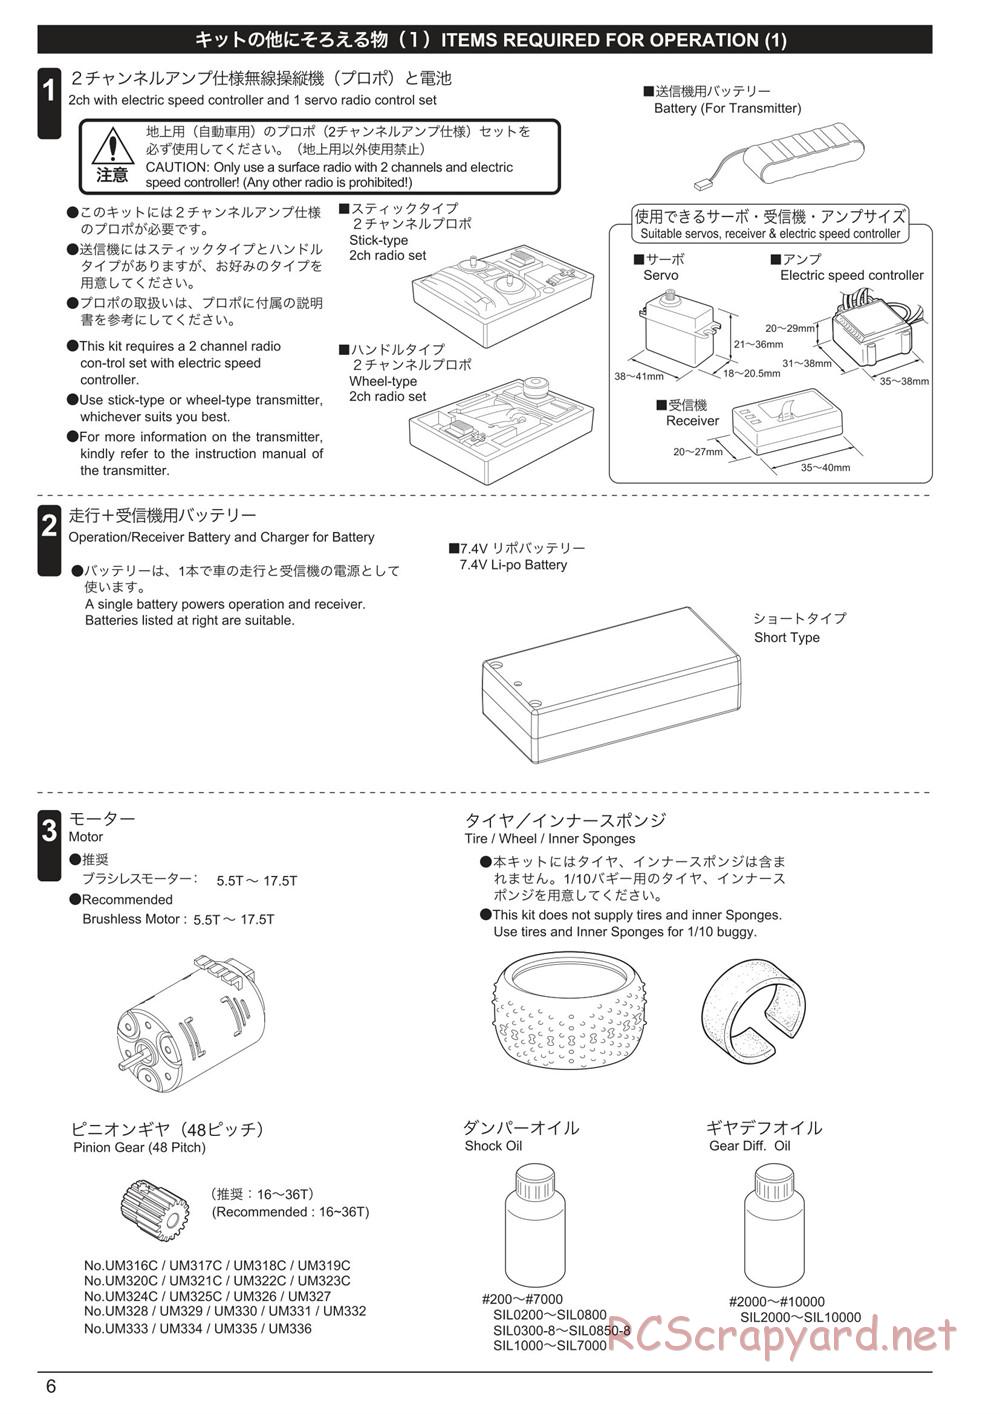 Kyosho - Lazer ZX7 - Manual - Page 6